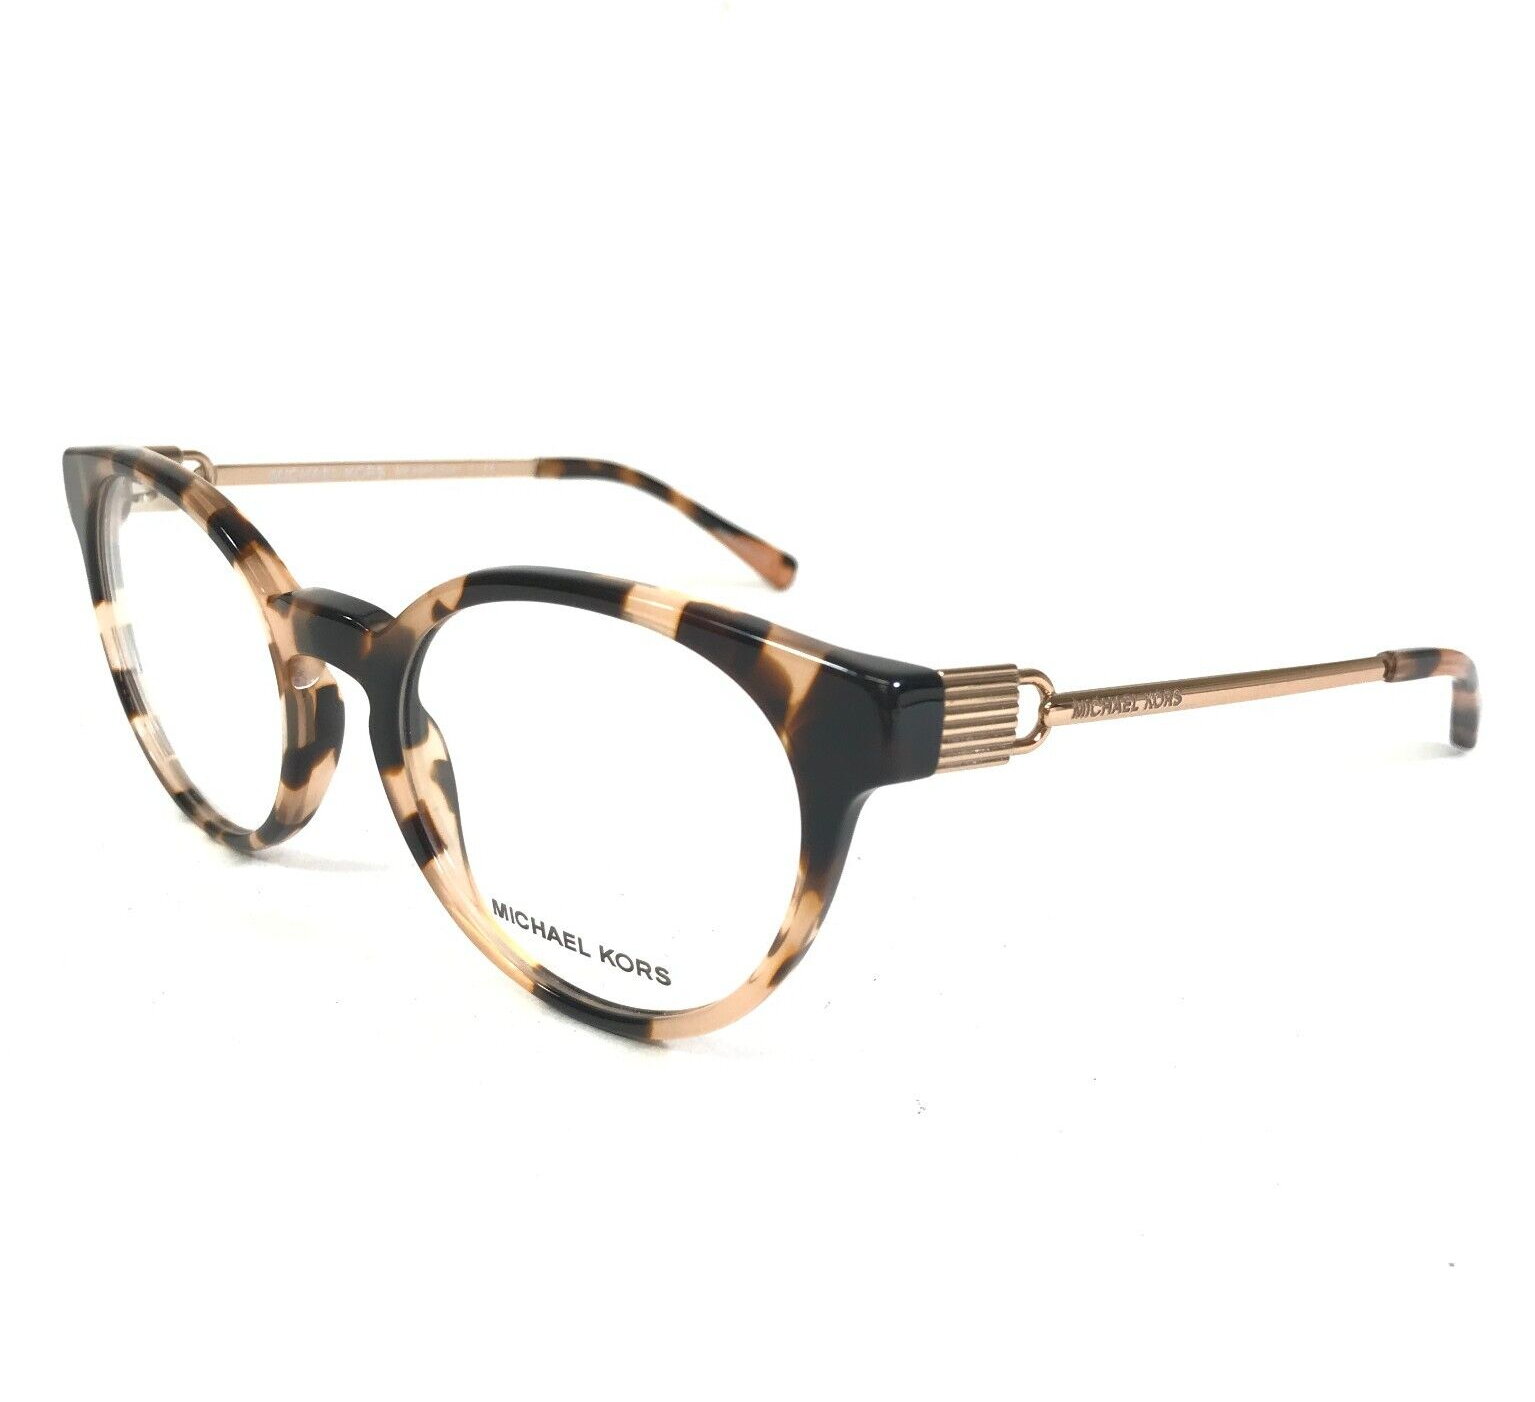 Michael Kors Eyeglasses Frames MK 4048 Kea 3155 Pink Tortoise Gold 51-19-135 - $32.47